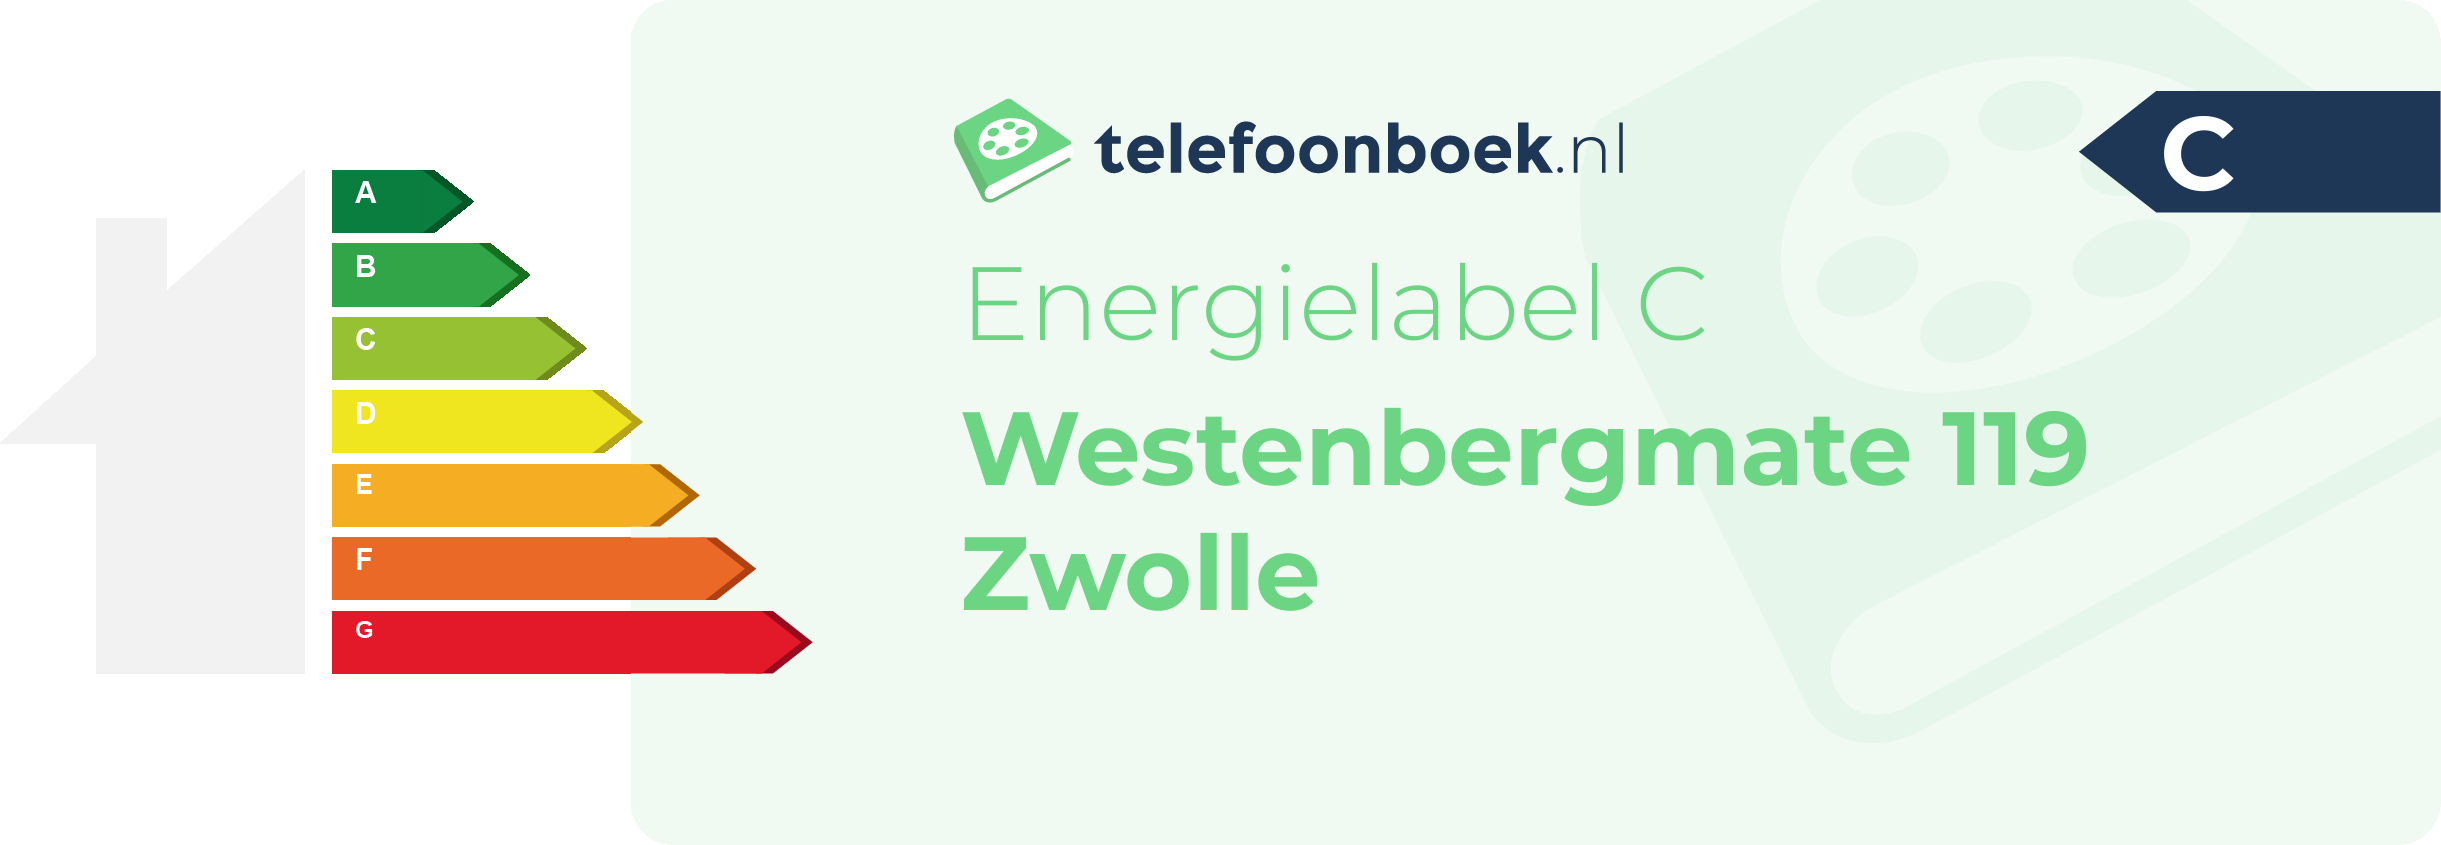 Energielabel Westenbergmate 119 Zwolle